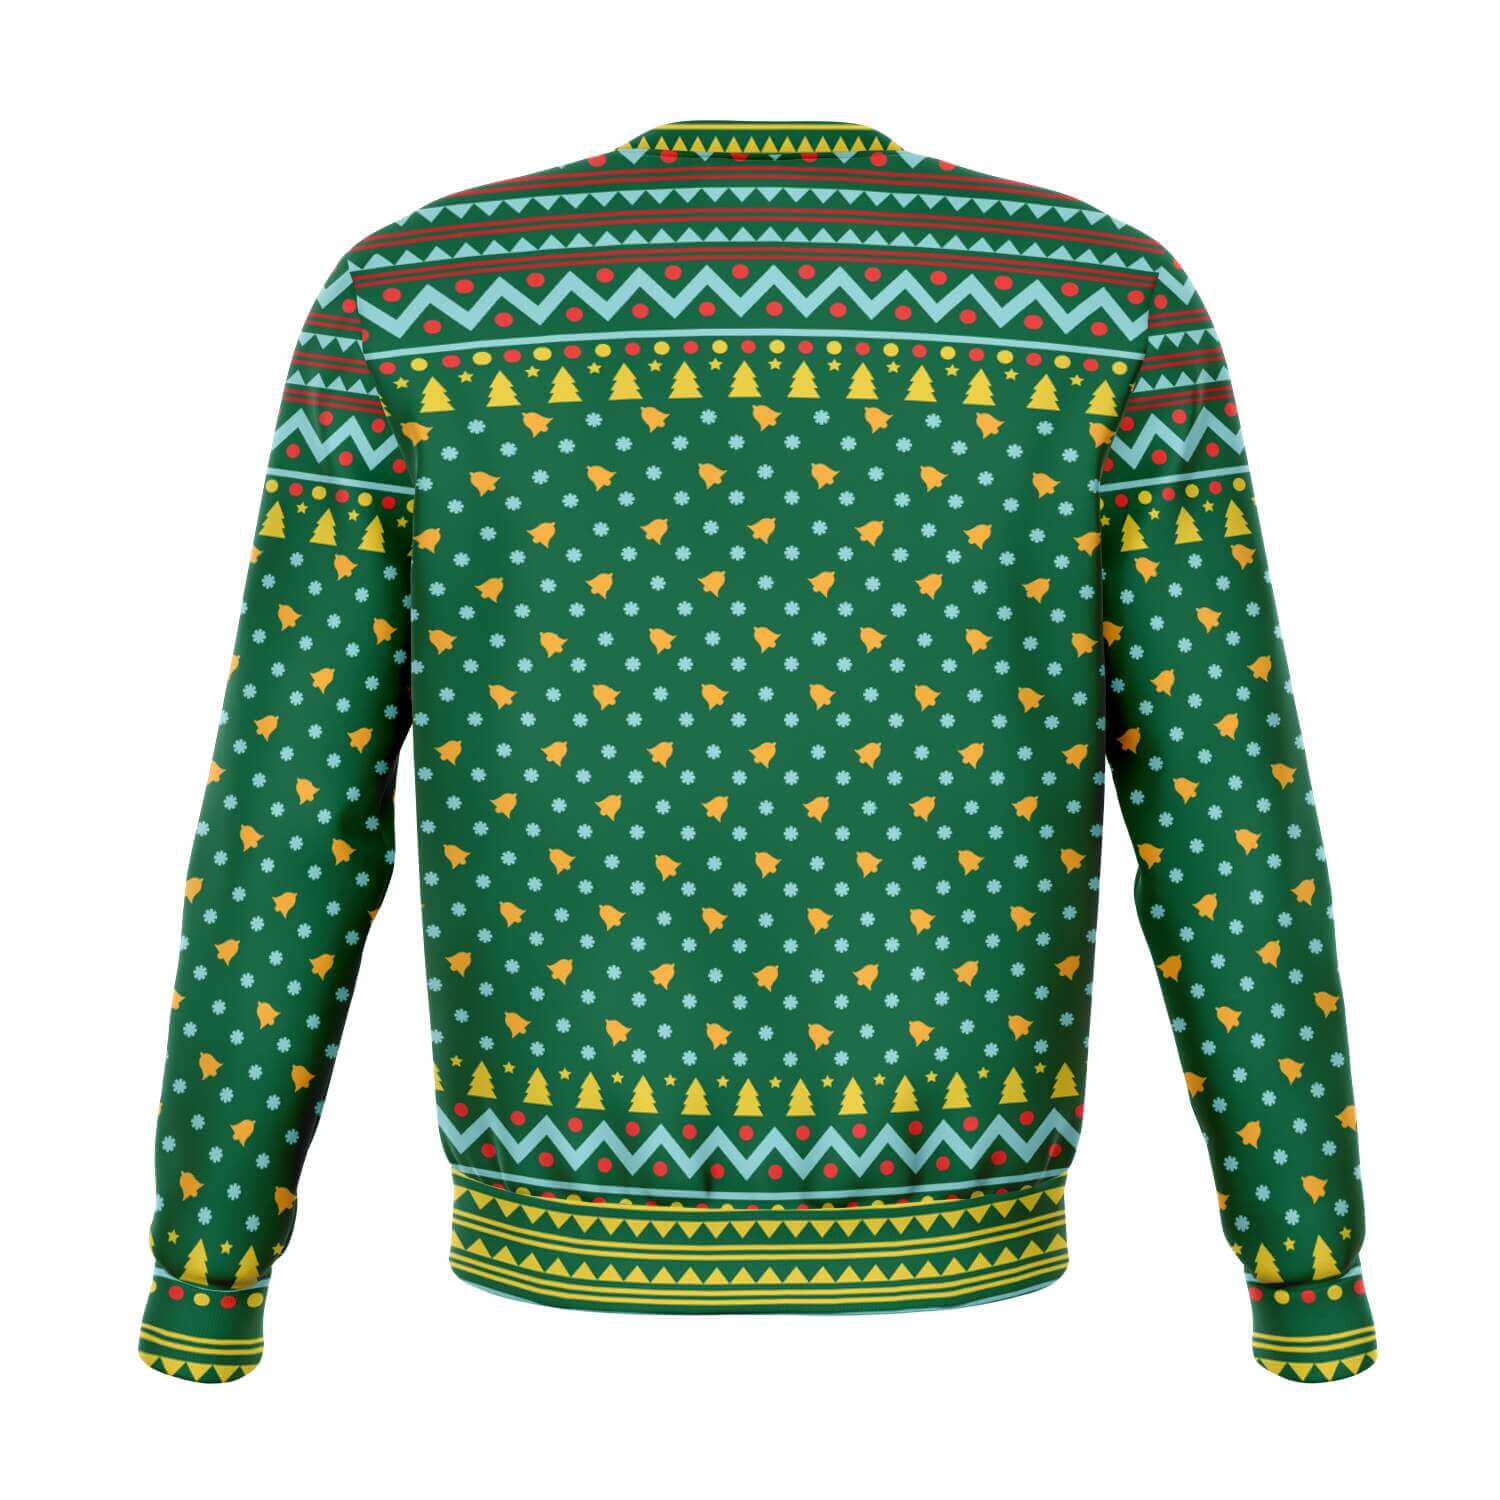 Merry-Deermas-Athletic-Fashion-sweatshirt